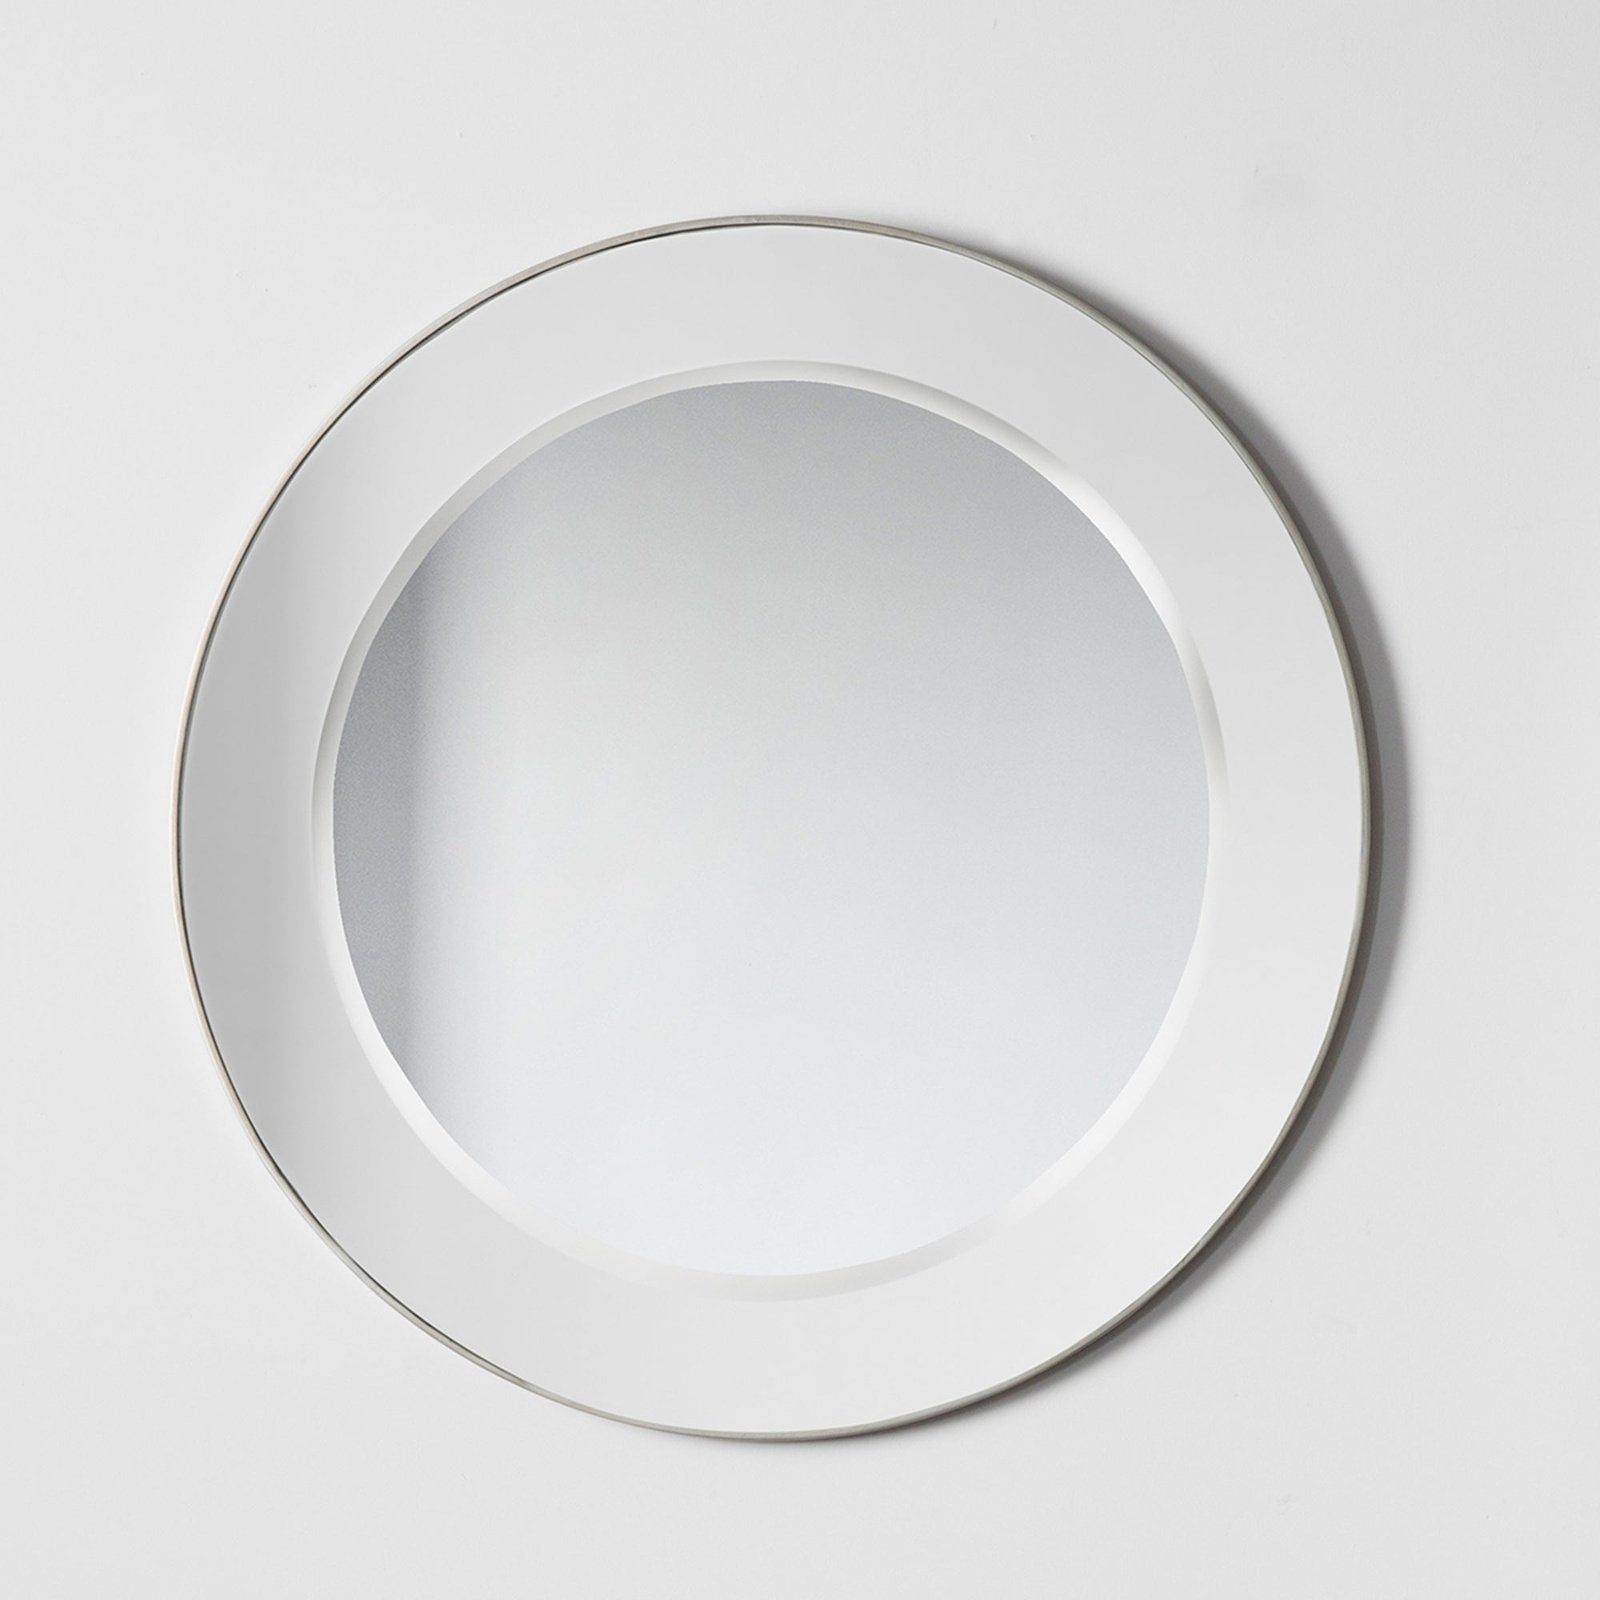 Brimio Silver Round Mirror 82.5 x 82.5cm - Shallow Angled Frame